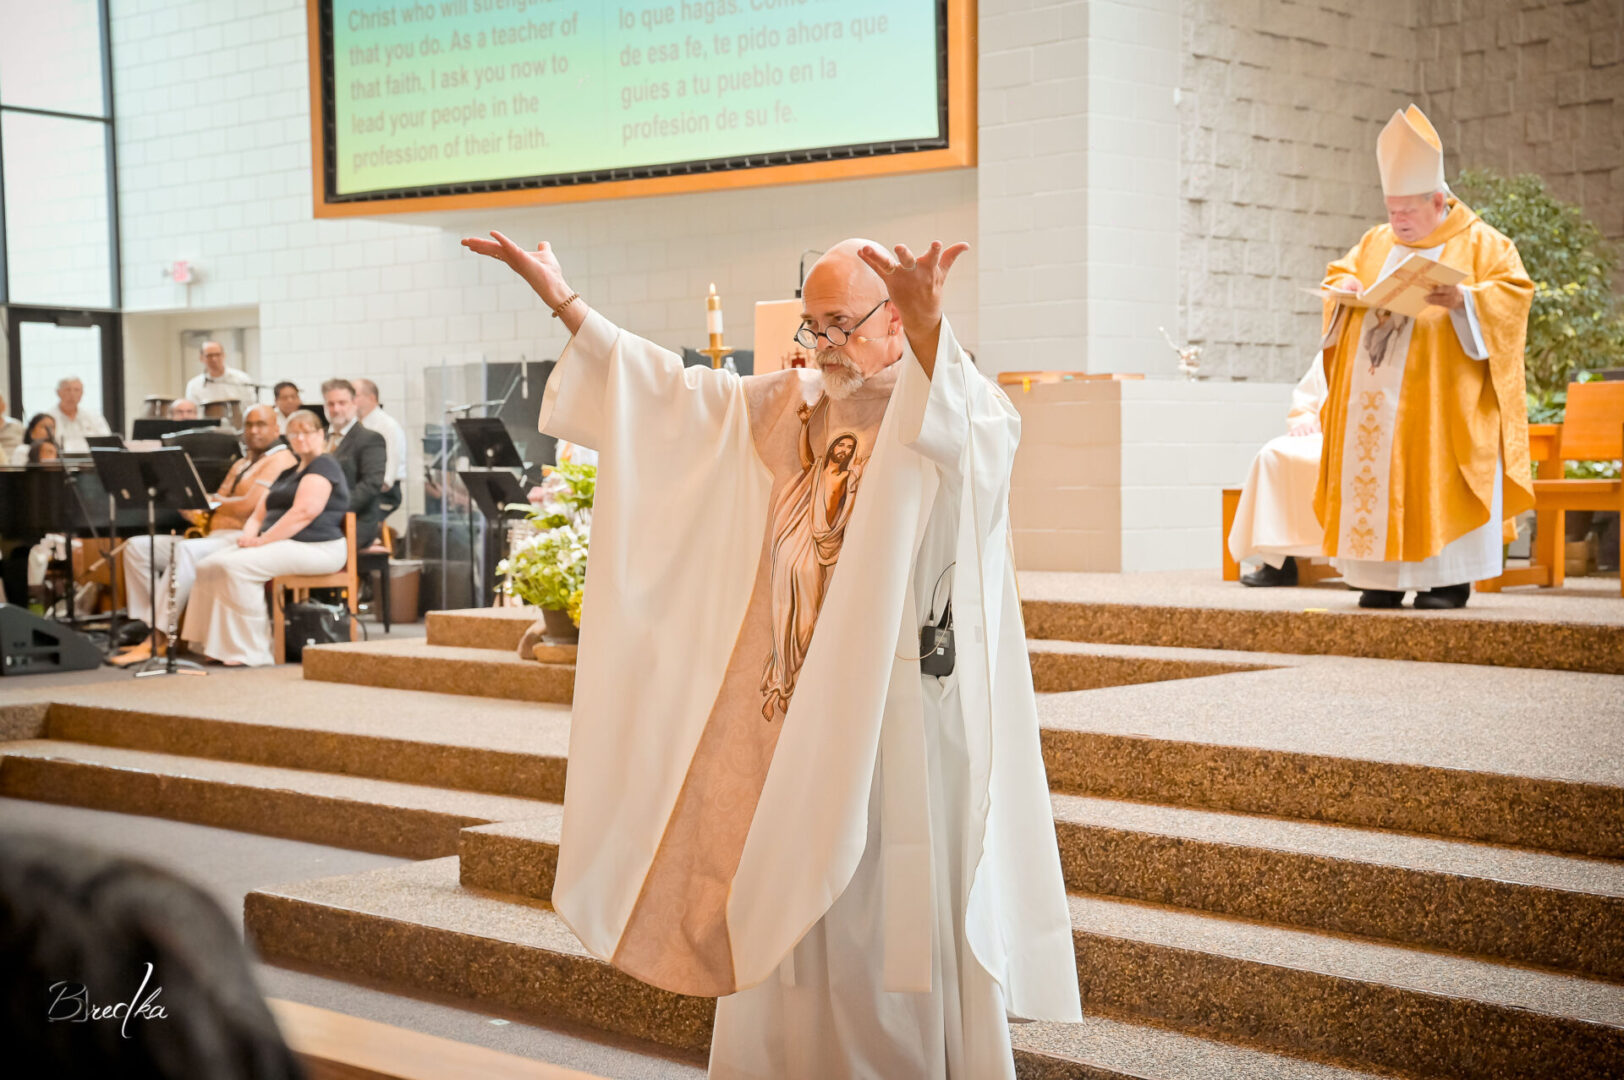 Man in white robe giving a sermon.